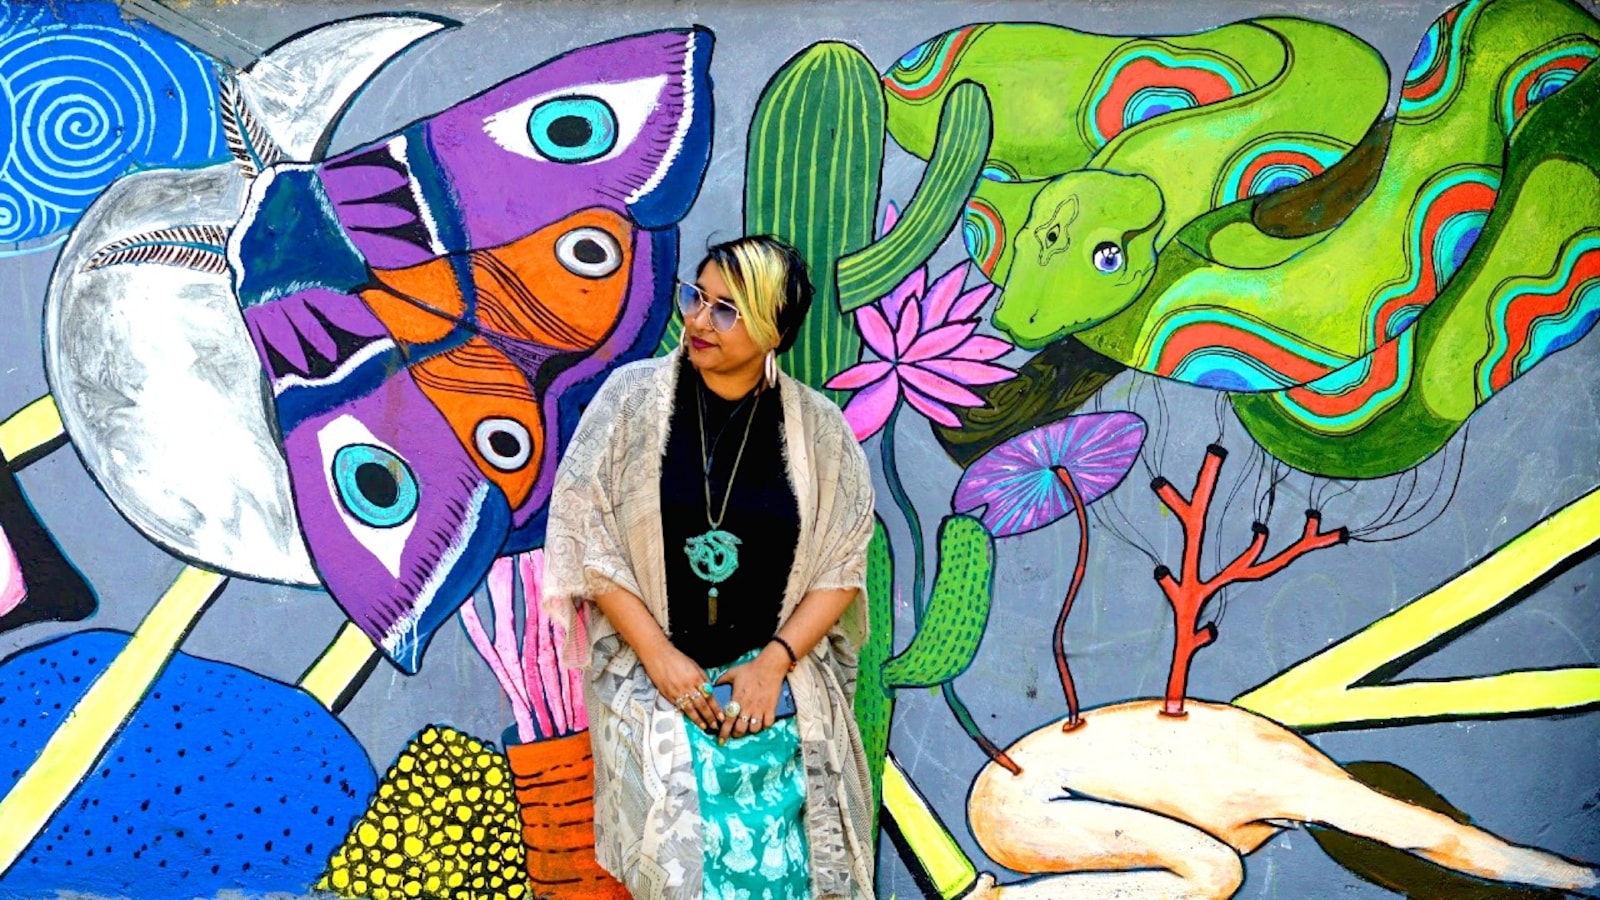 A wall artist who uses art as a healing tool